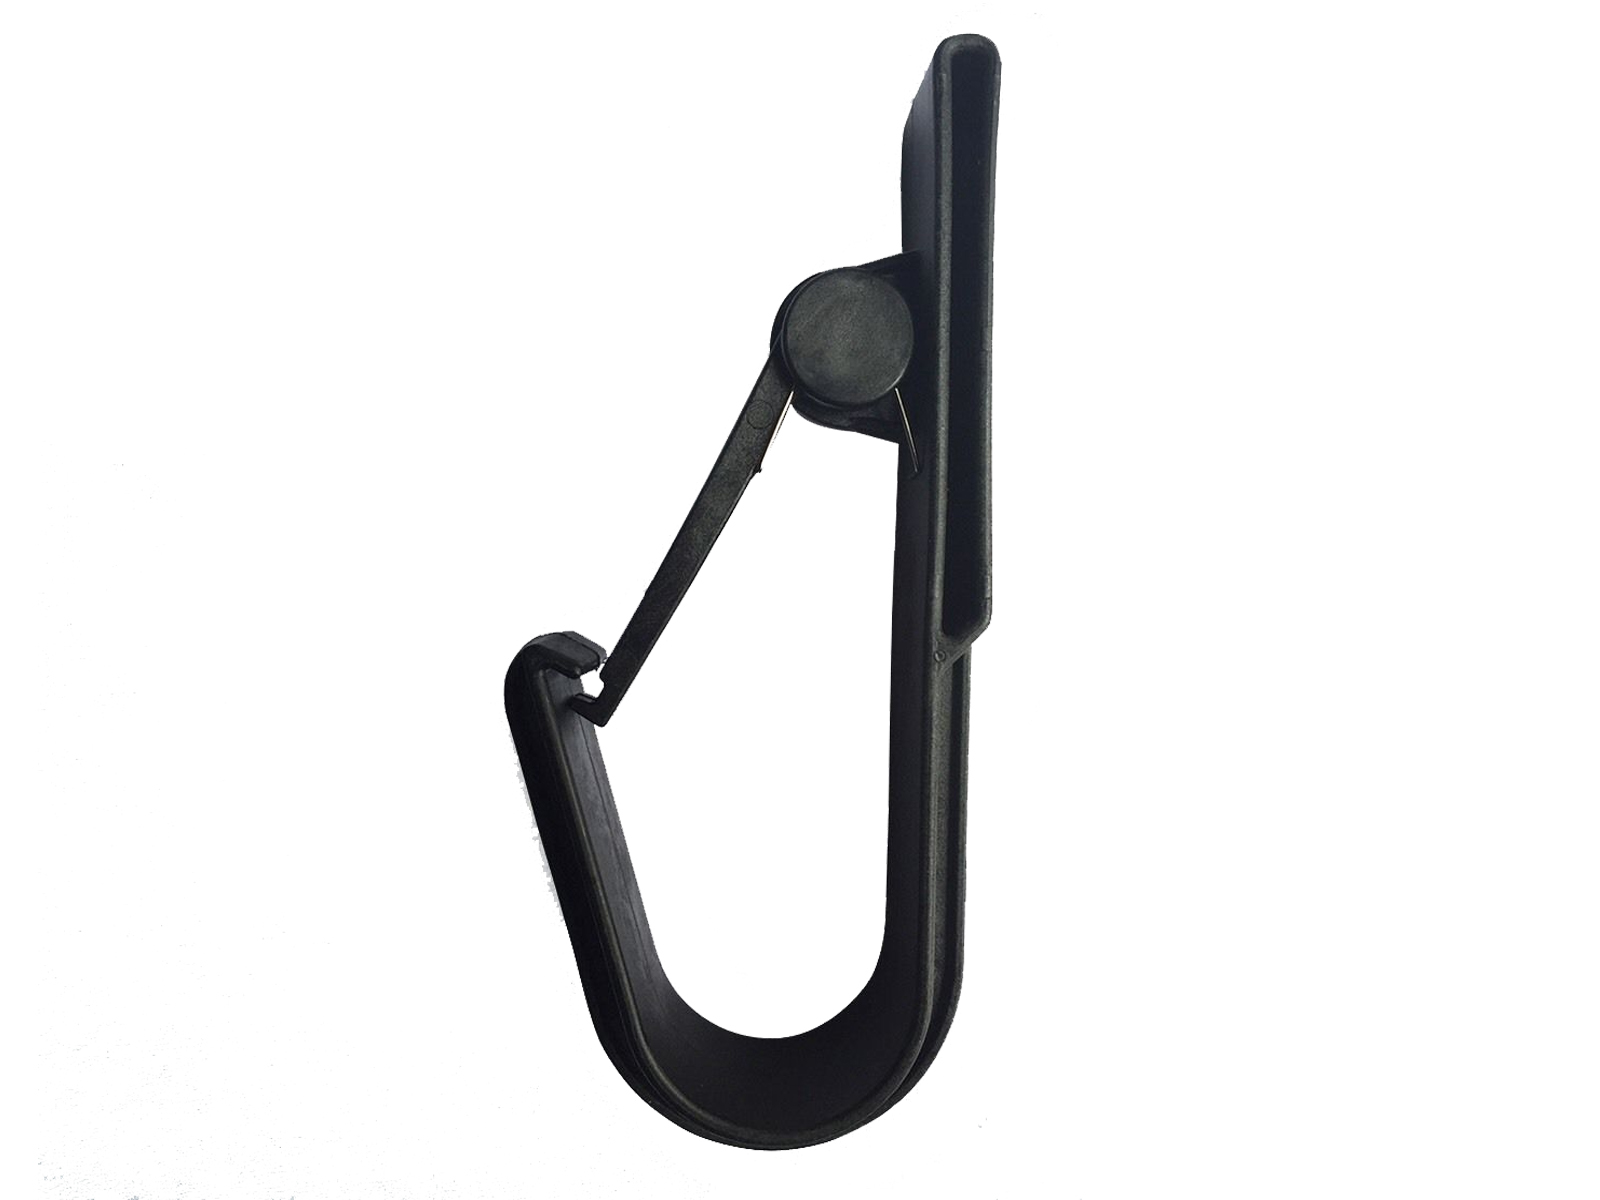 The Gorilla Hook Company - Gorilla Hook Tool Stay Storage - Tool Belt Accessory